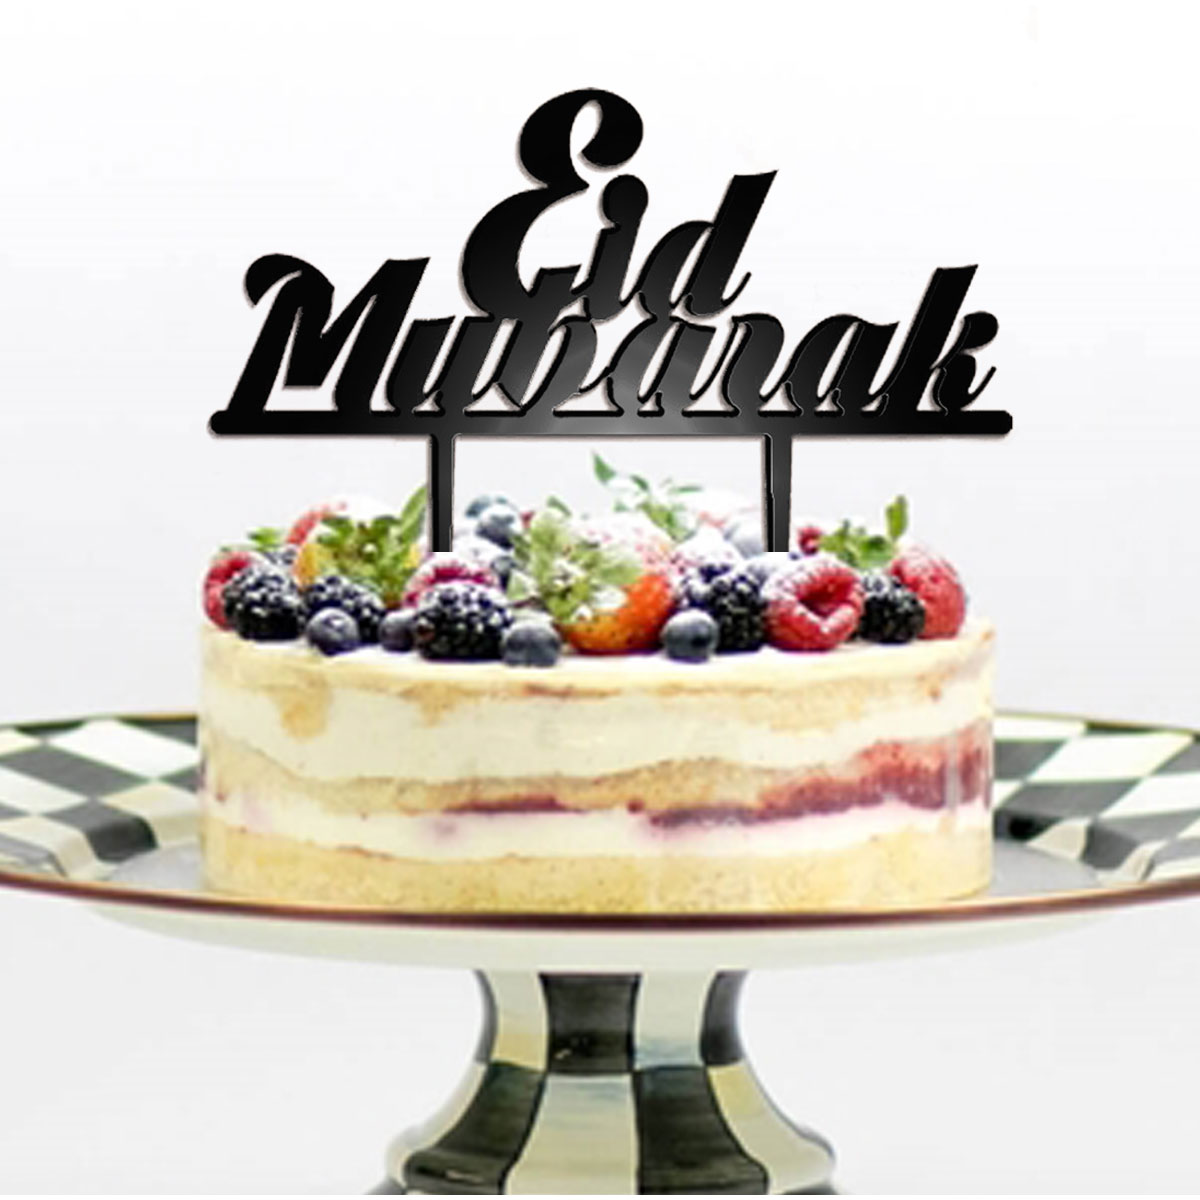 Eid-Mubarak-Ramadan-Iftar-Cake-Topper-Muslim-Islam-Hajj-Cake-Decor-Black-Gold-Cake-Decorations-Cake--1308590-3